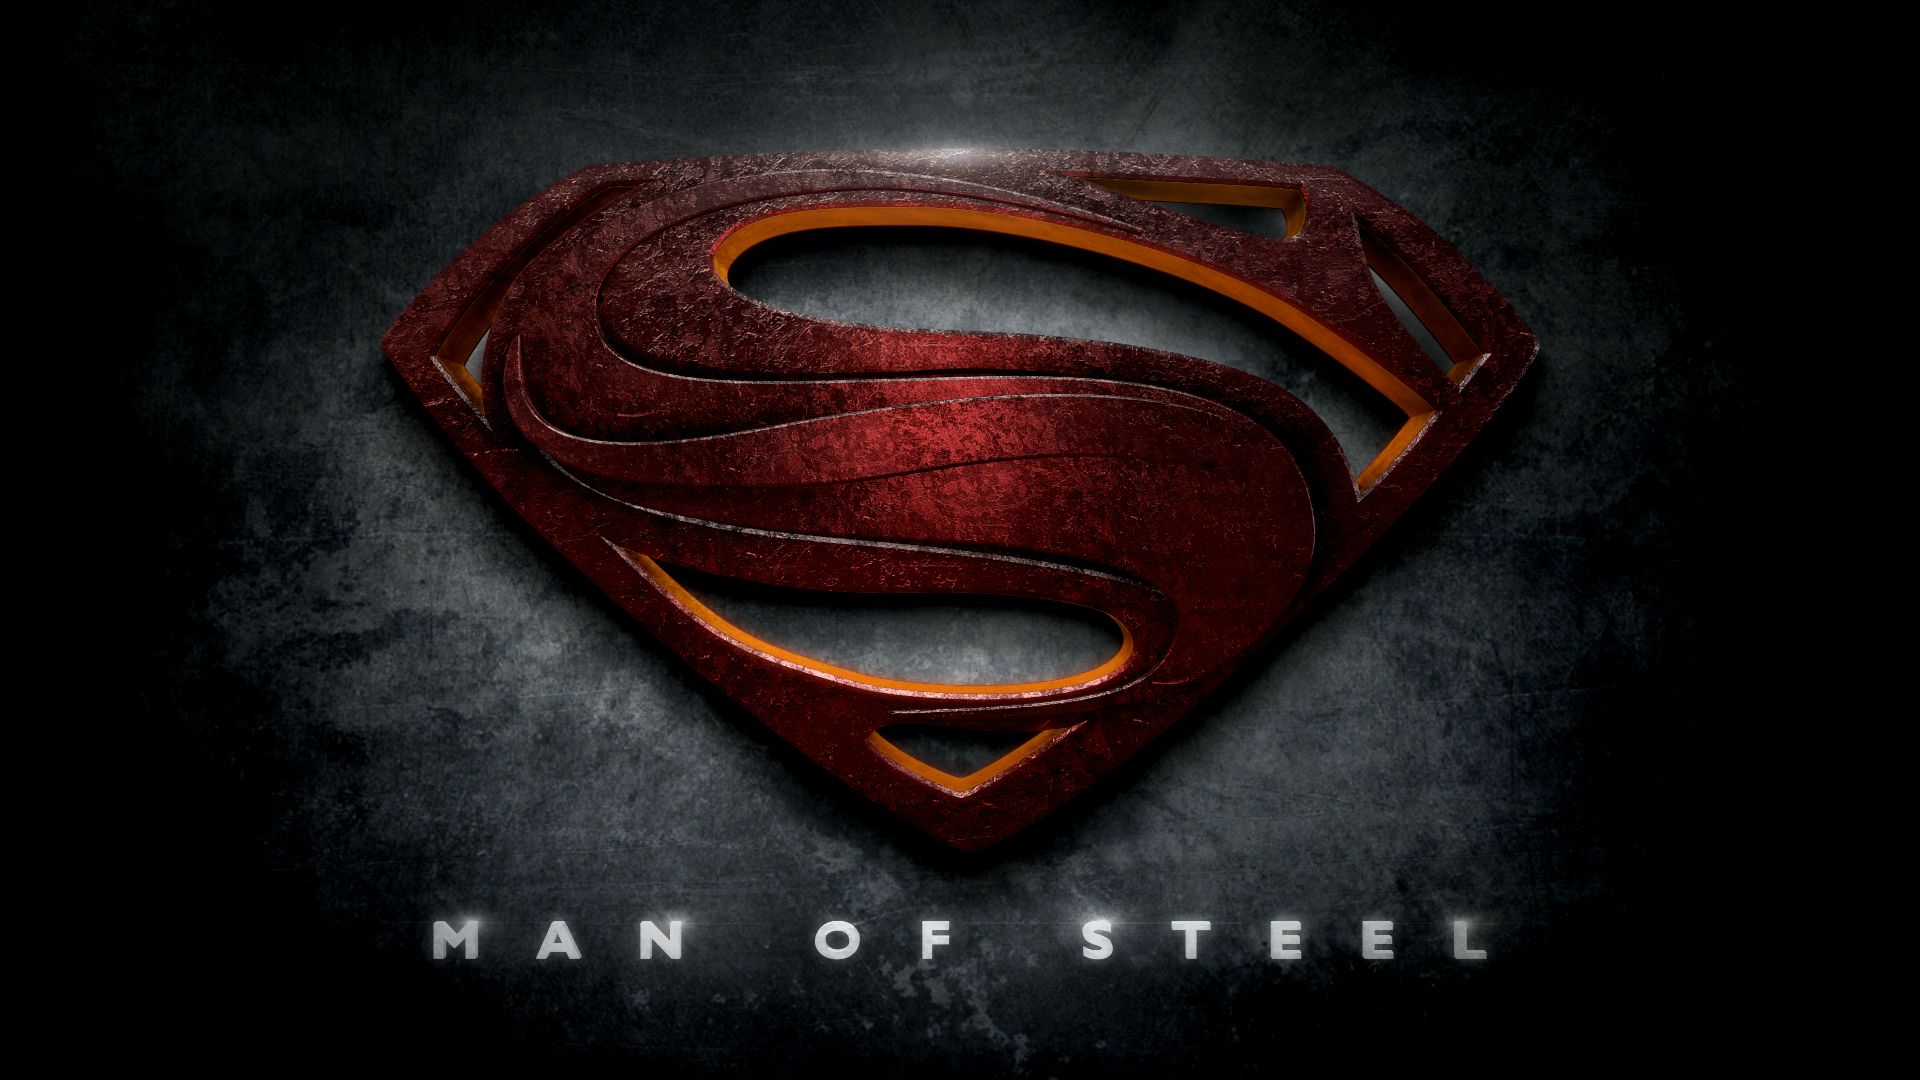 hd wallpaper superman man of steel logo wallpapers55com   Best